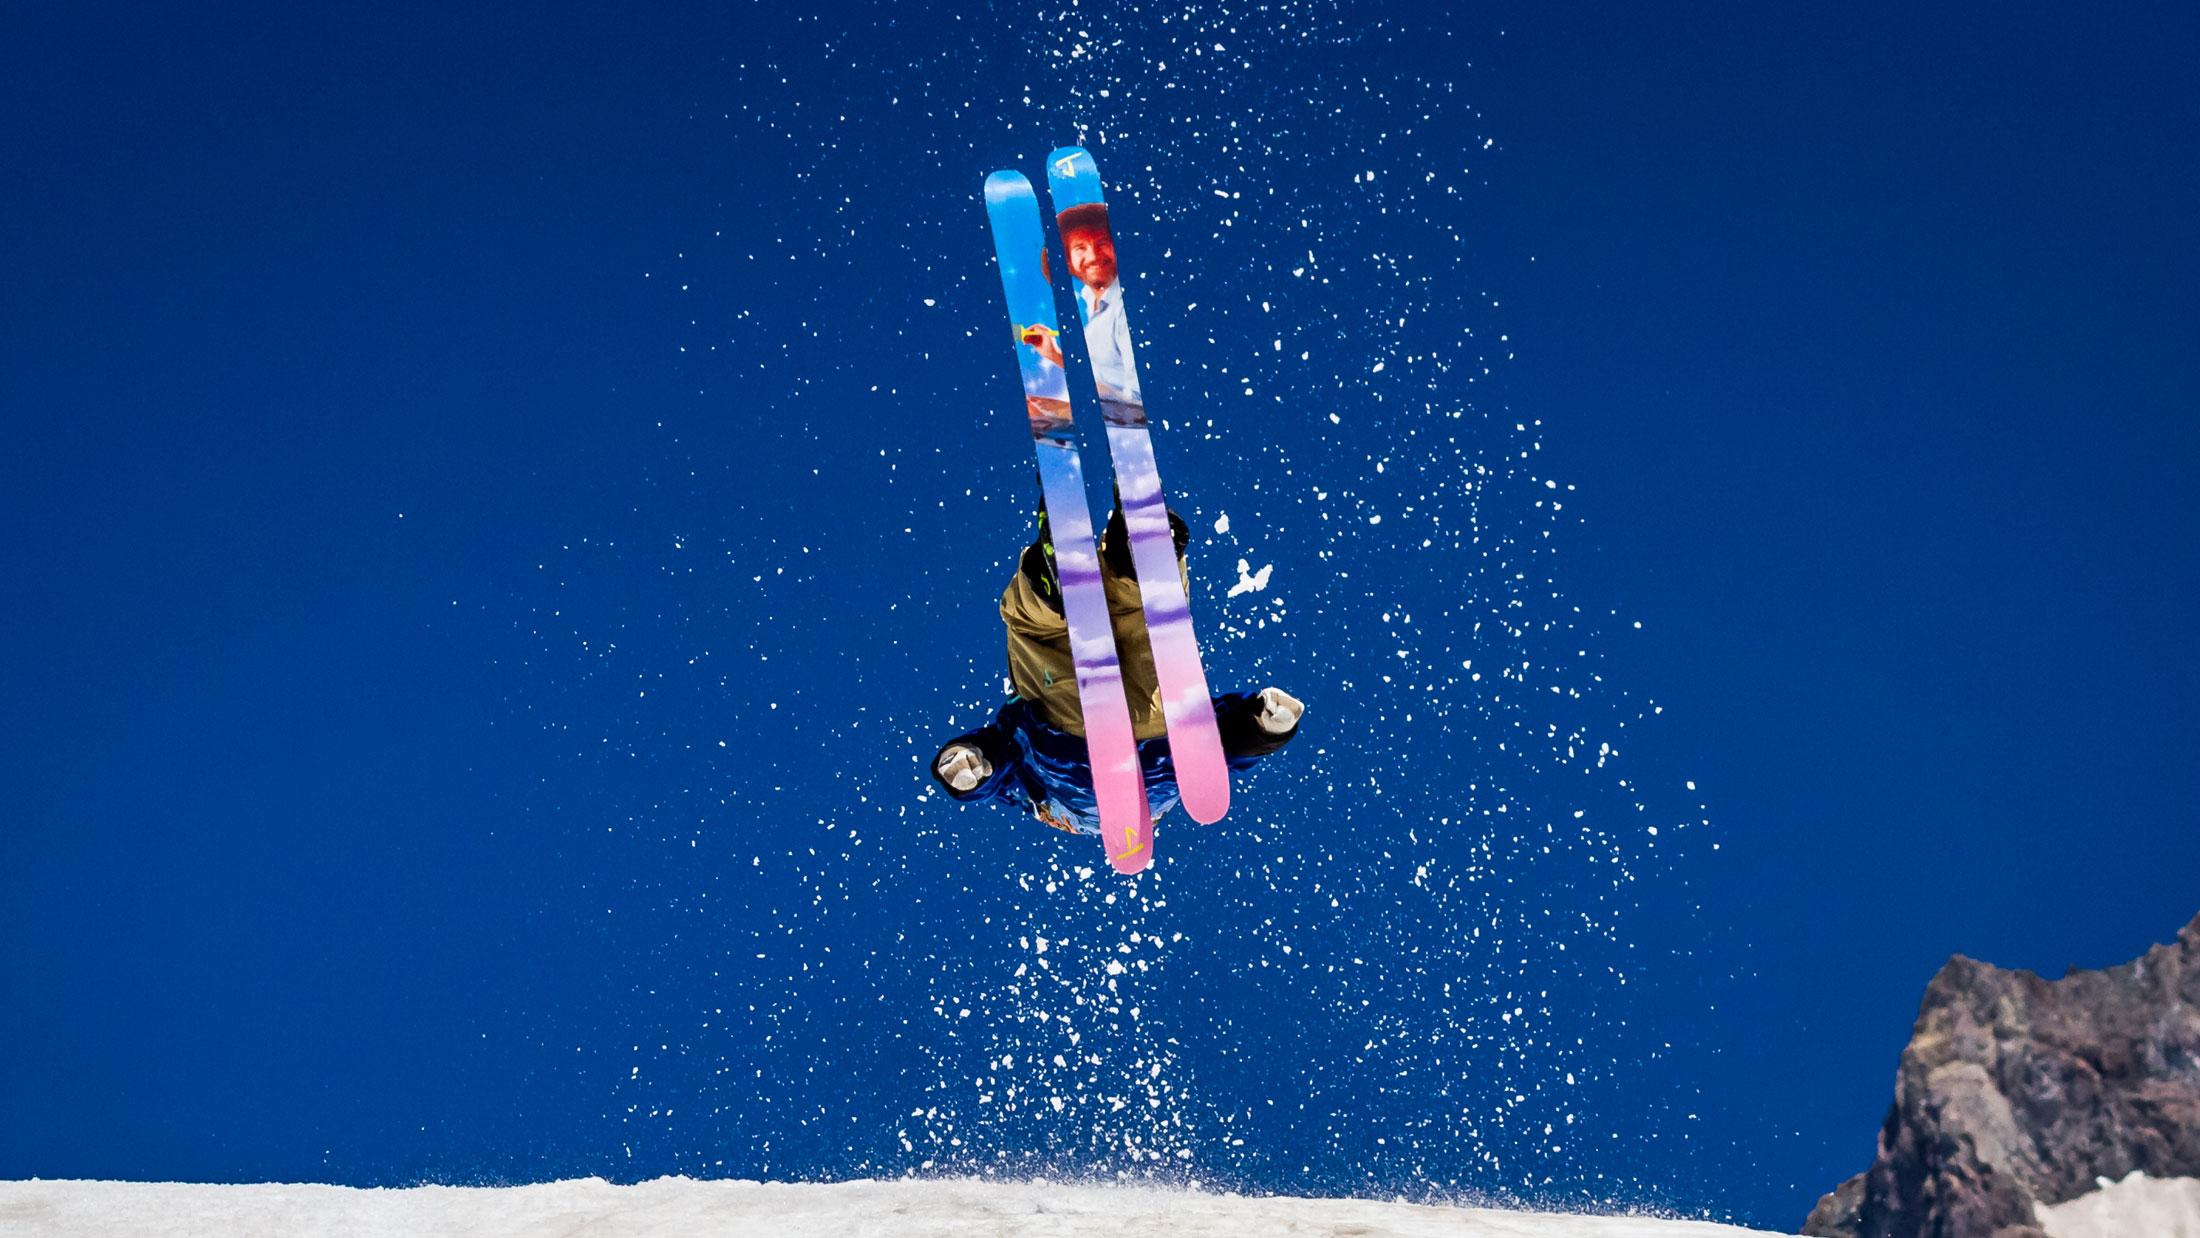 The Allplay "THE JOY OF SKIING 2" Bob Ross x J Collab Limited Edition Ski Shredding Image